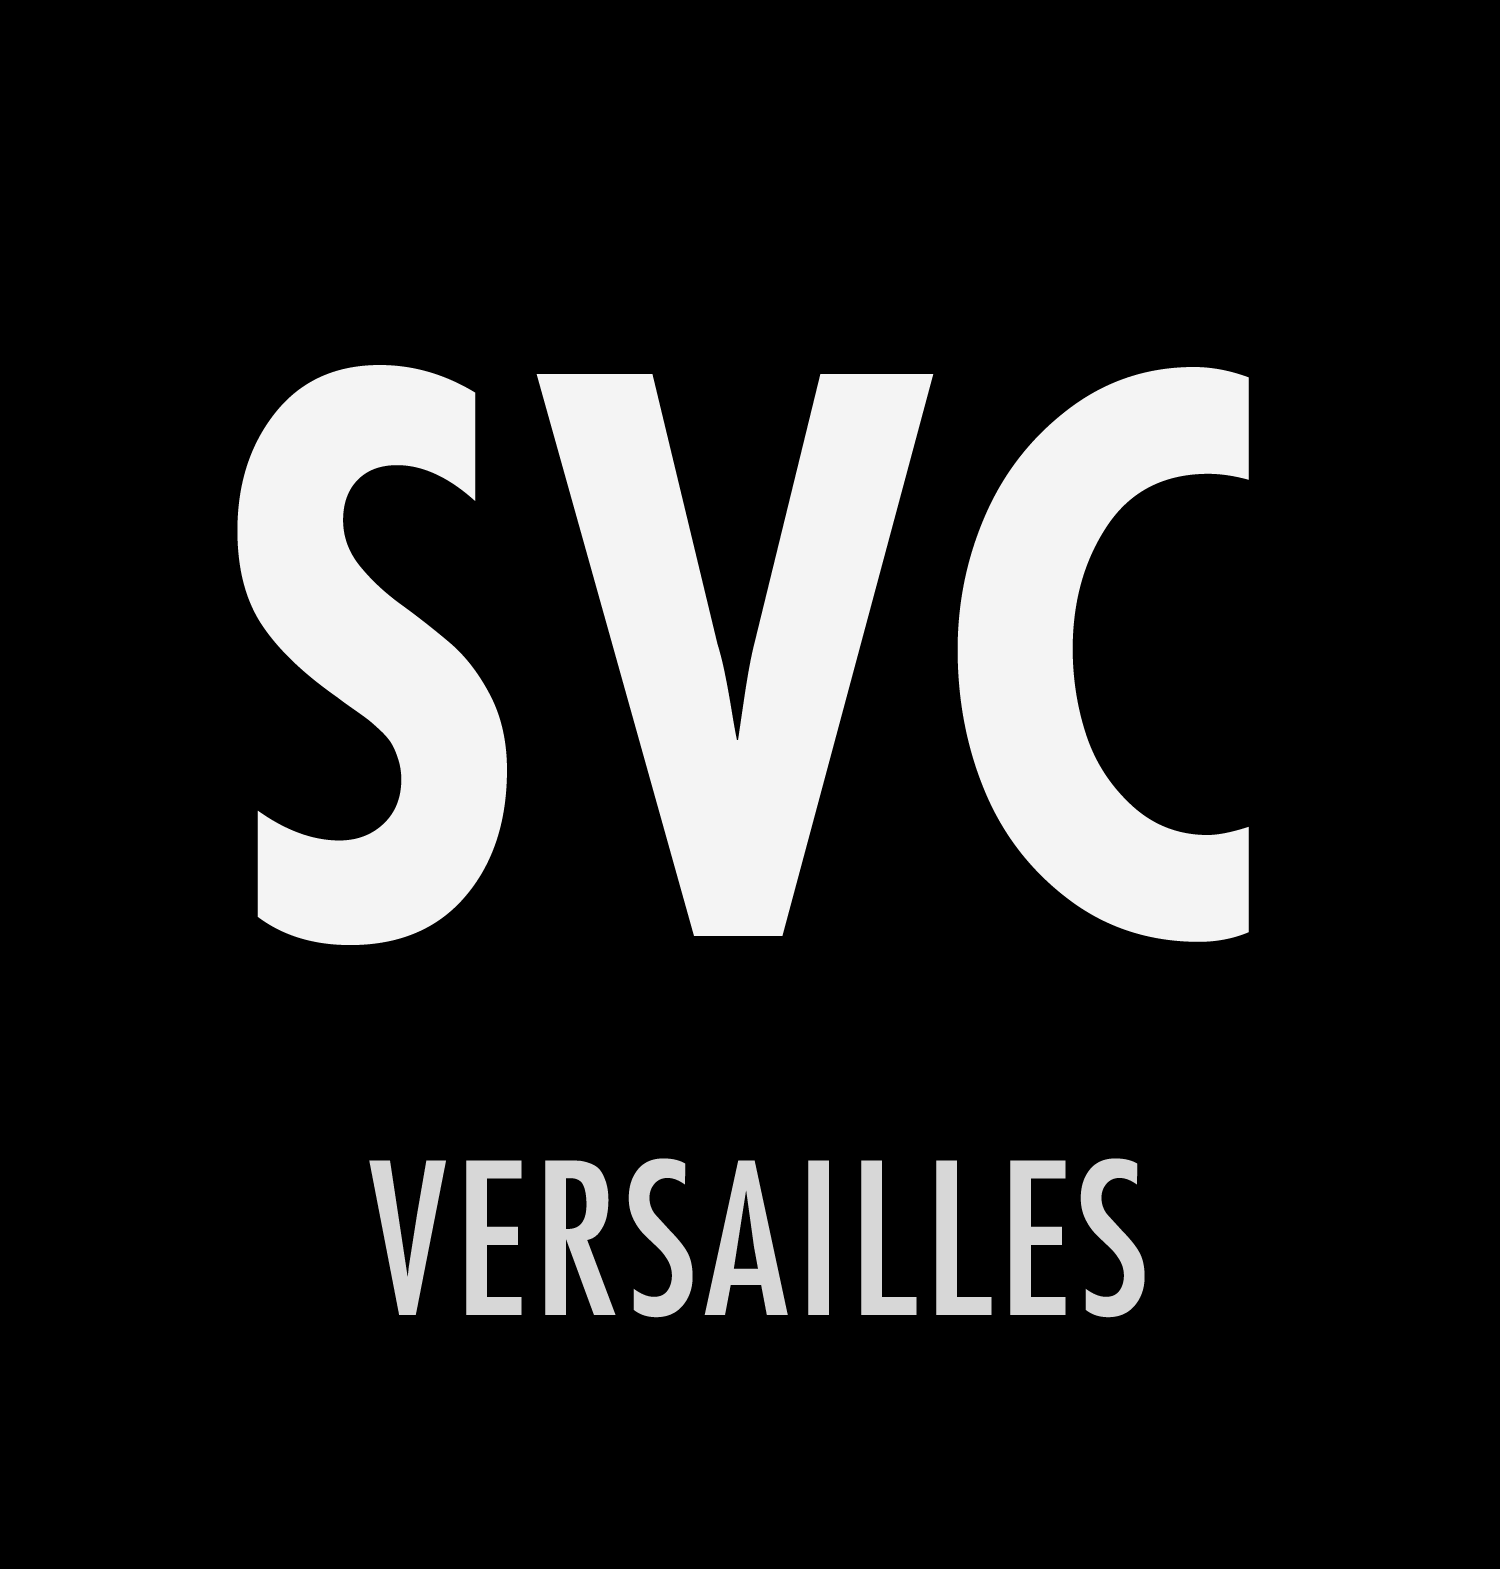 SVC Versailles